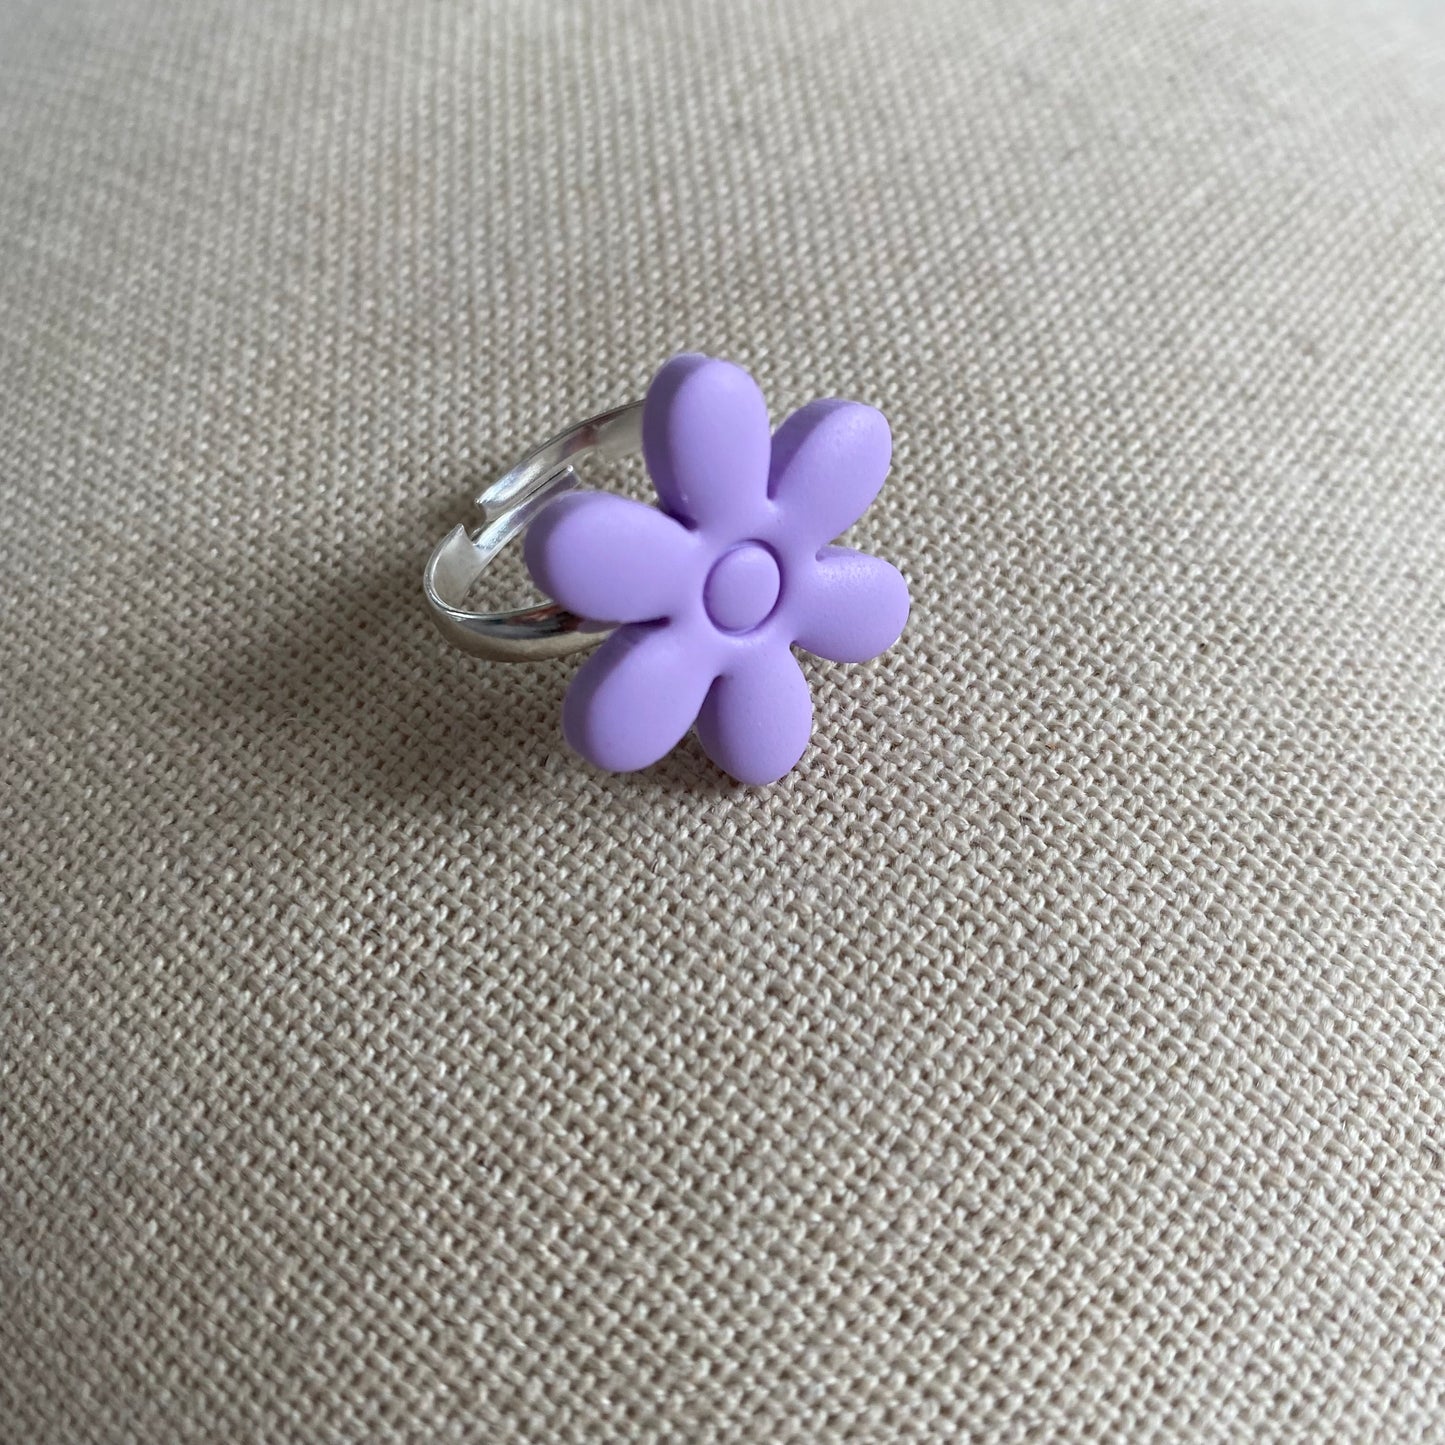 Retro dainty flower ring handmade in UK ~ adjustable ring